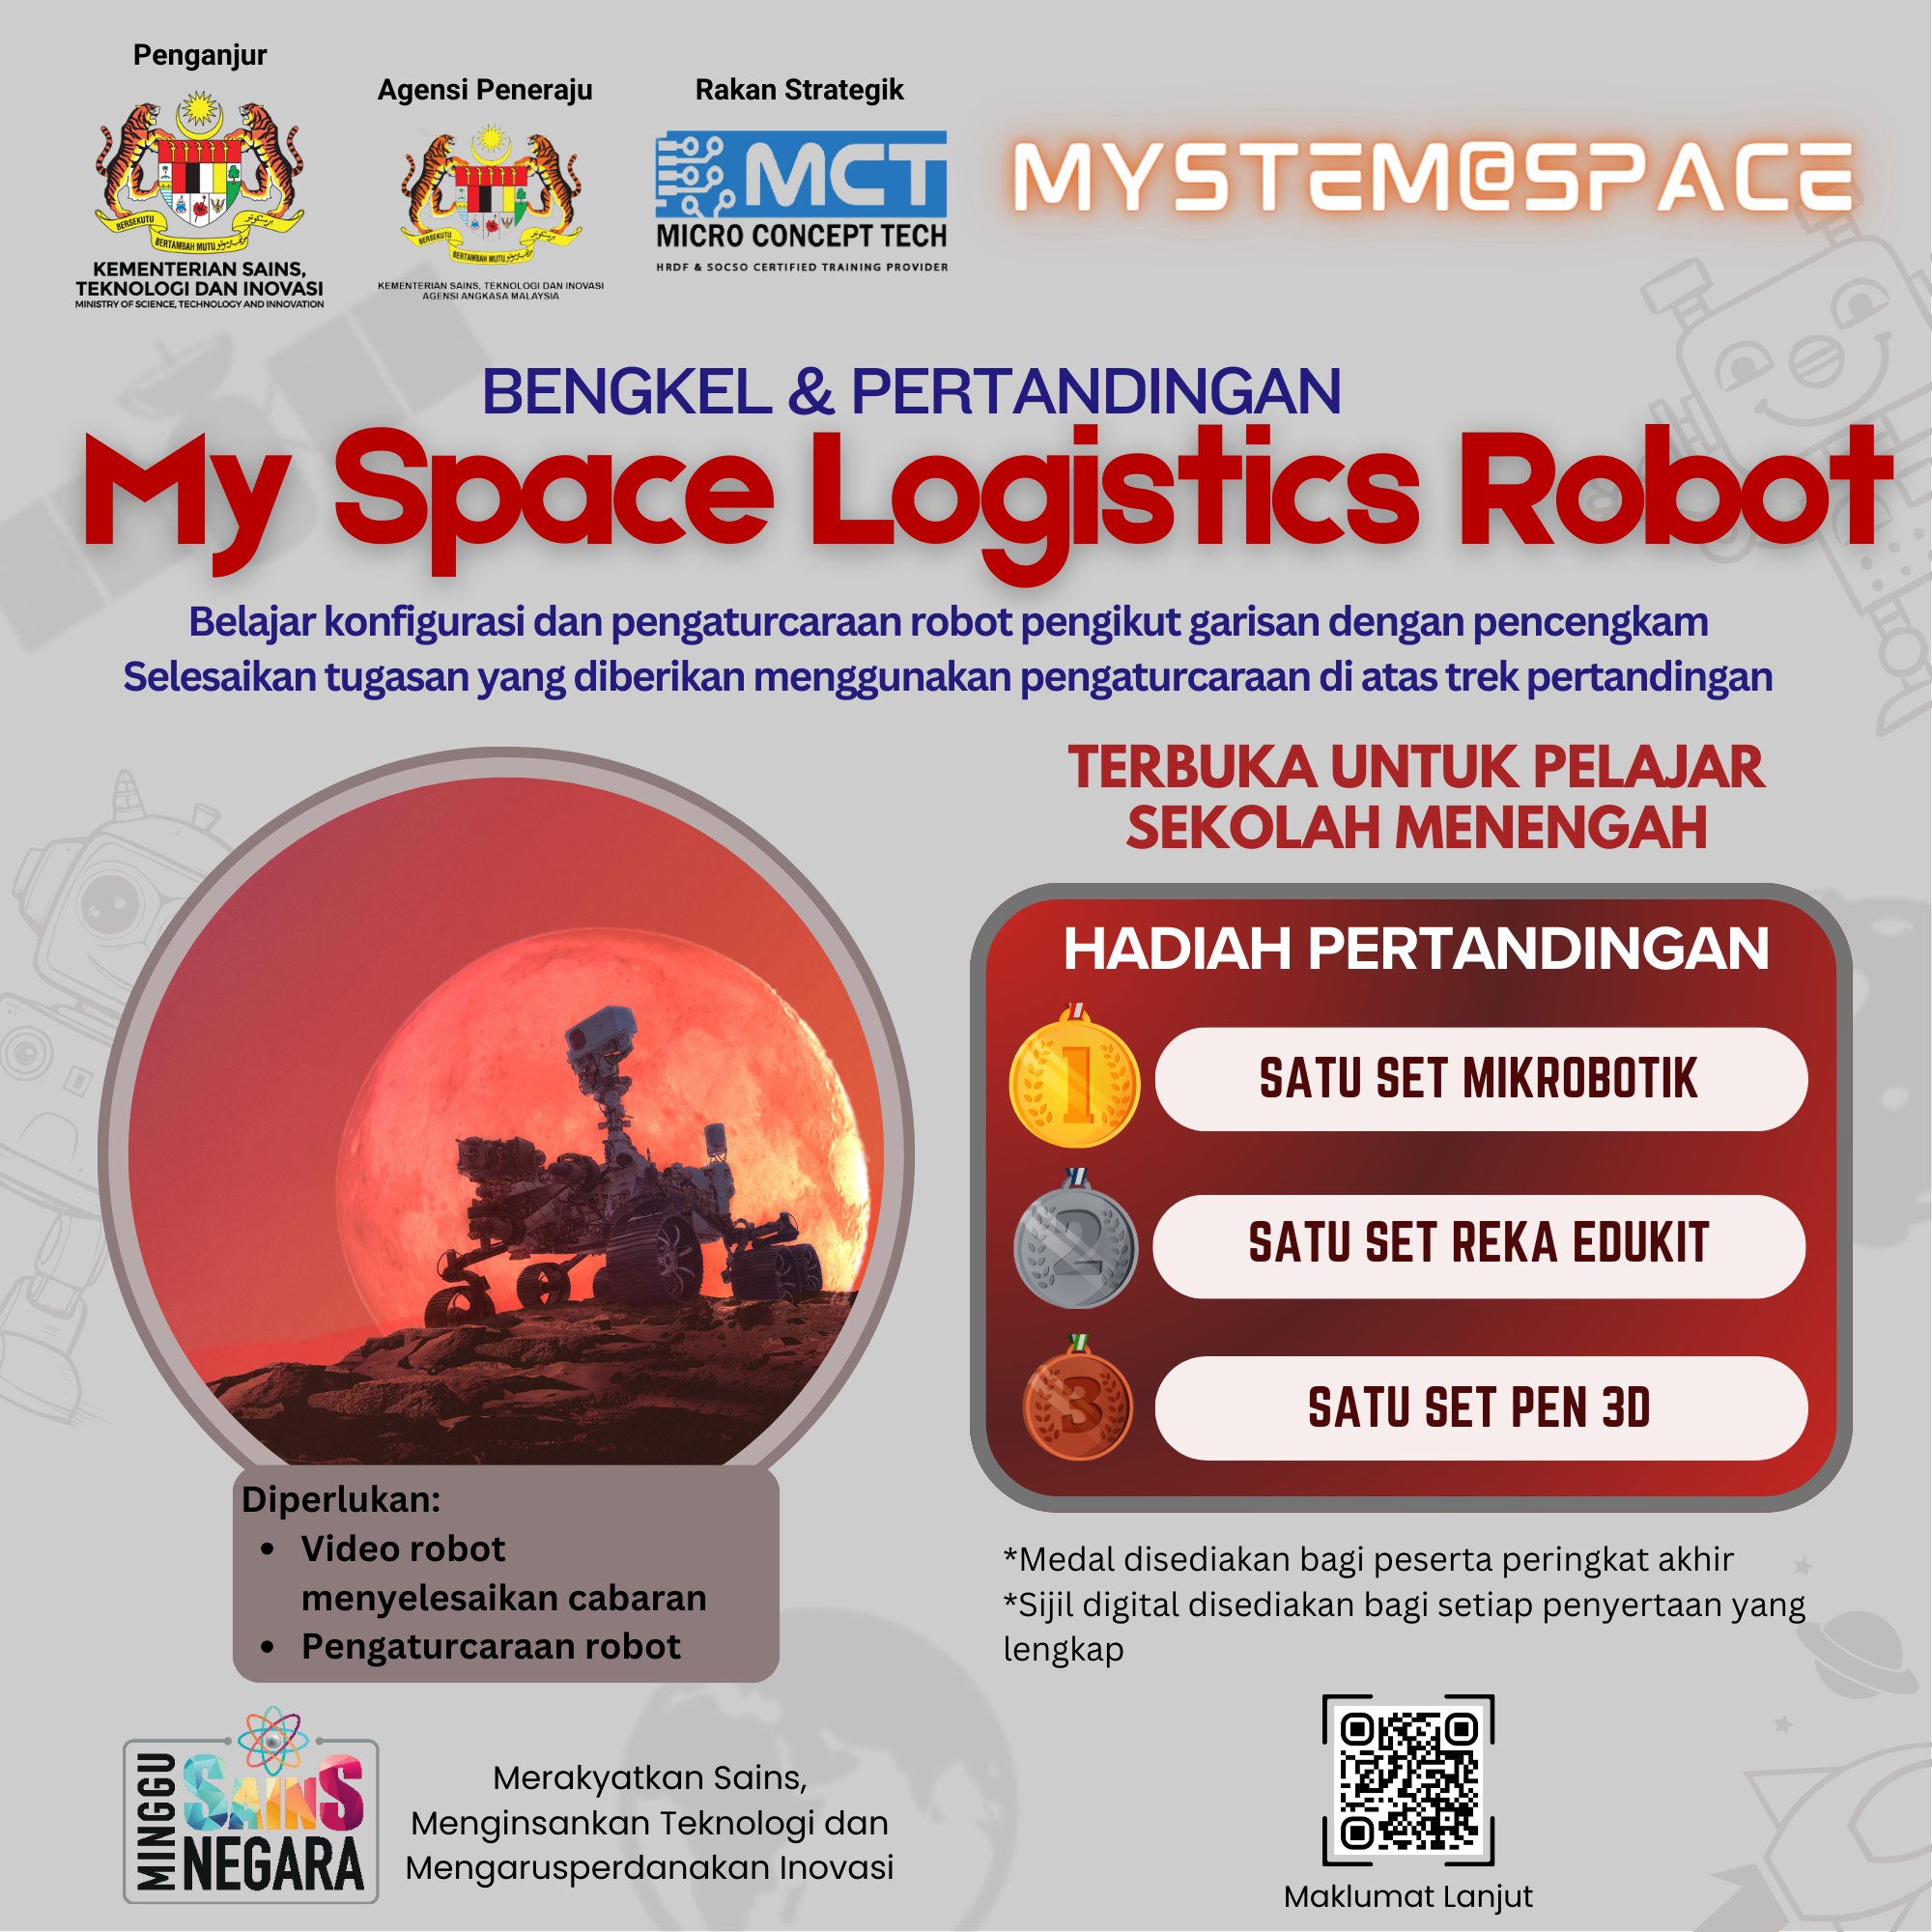 MySTEM@SPACE_PosterMySpaceLogisticsRobot